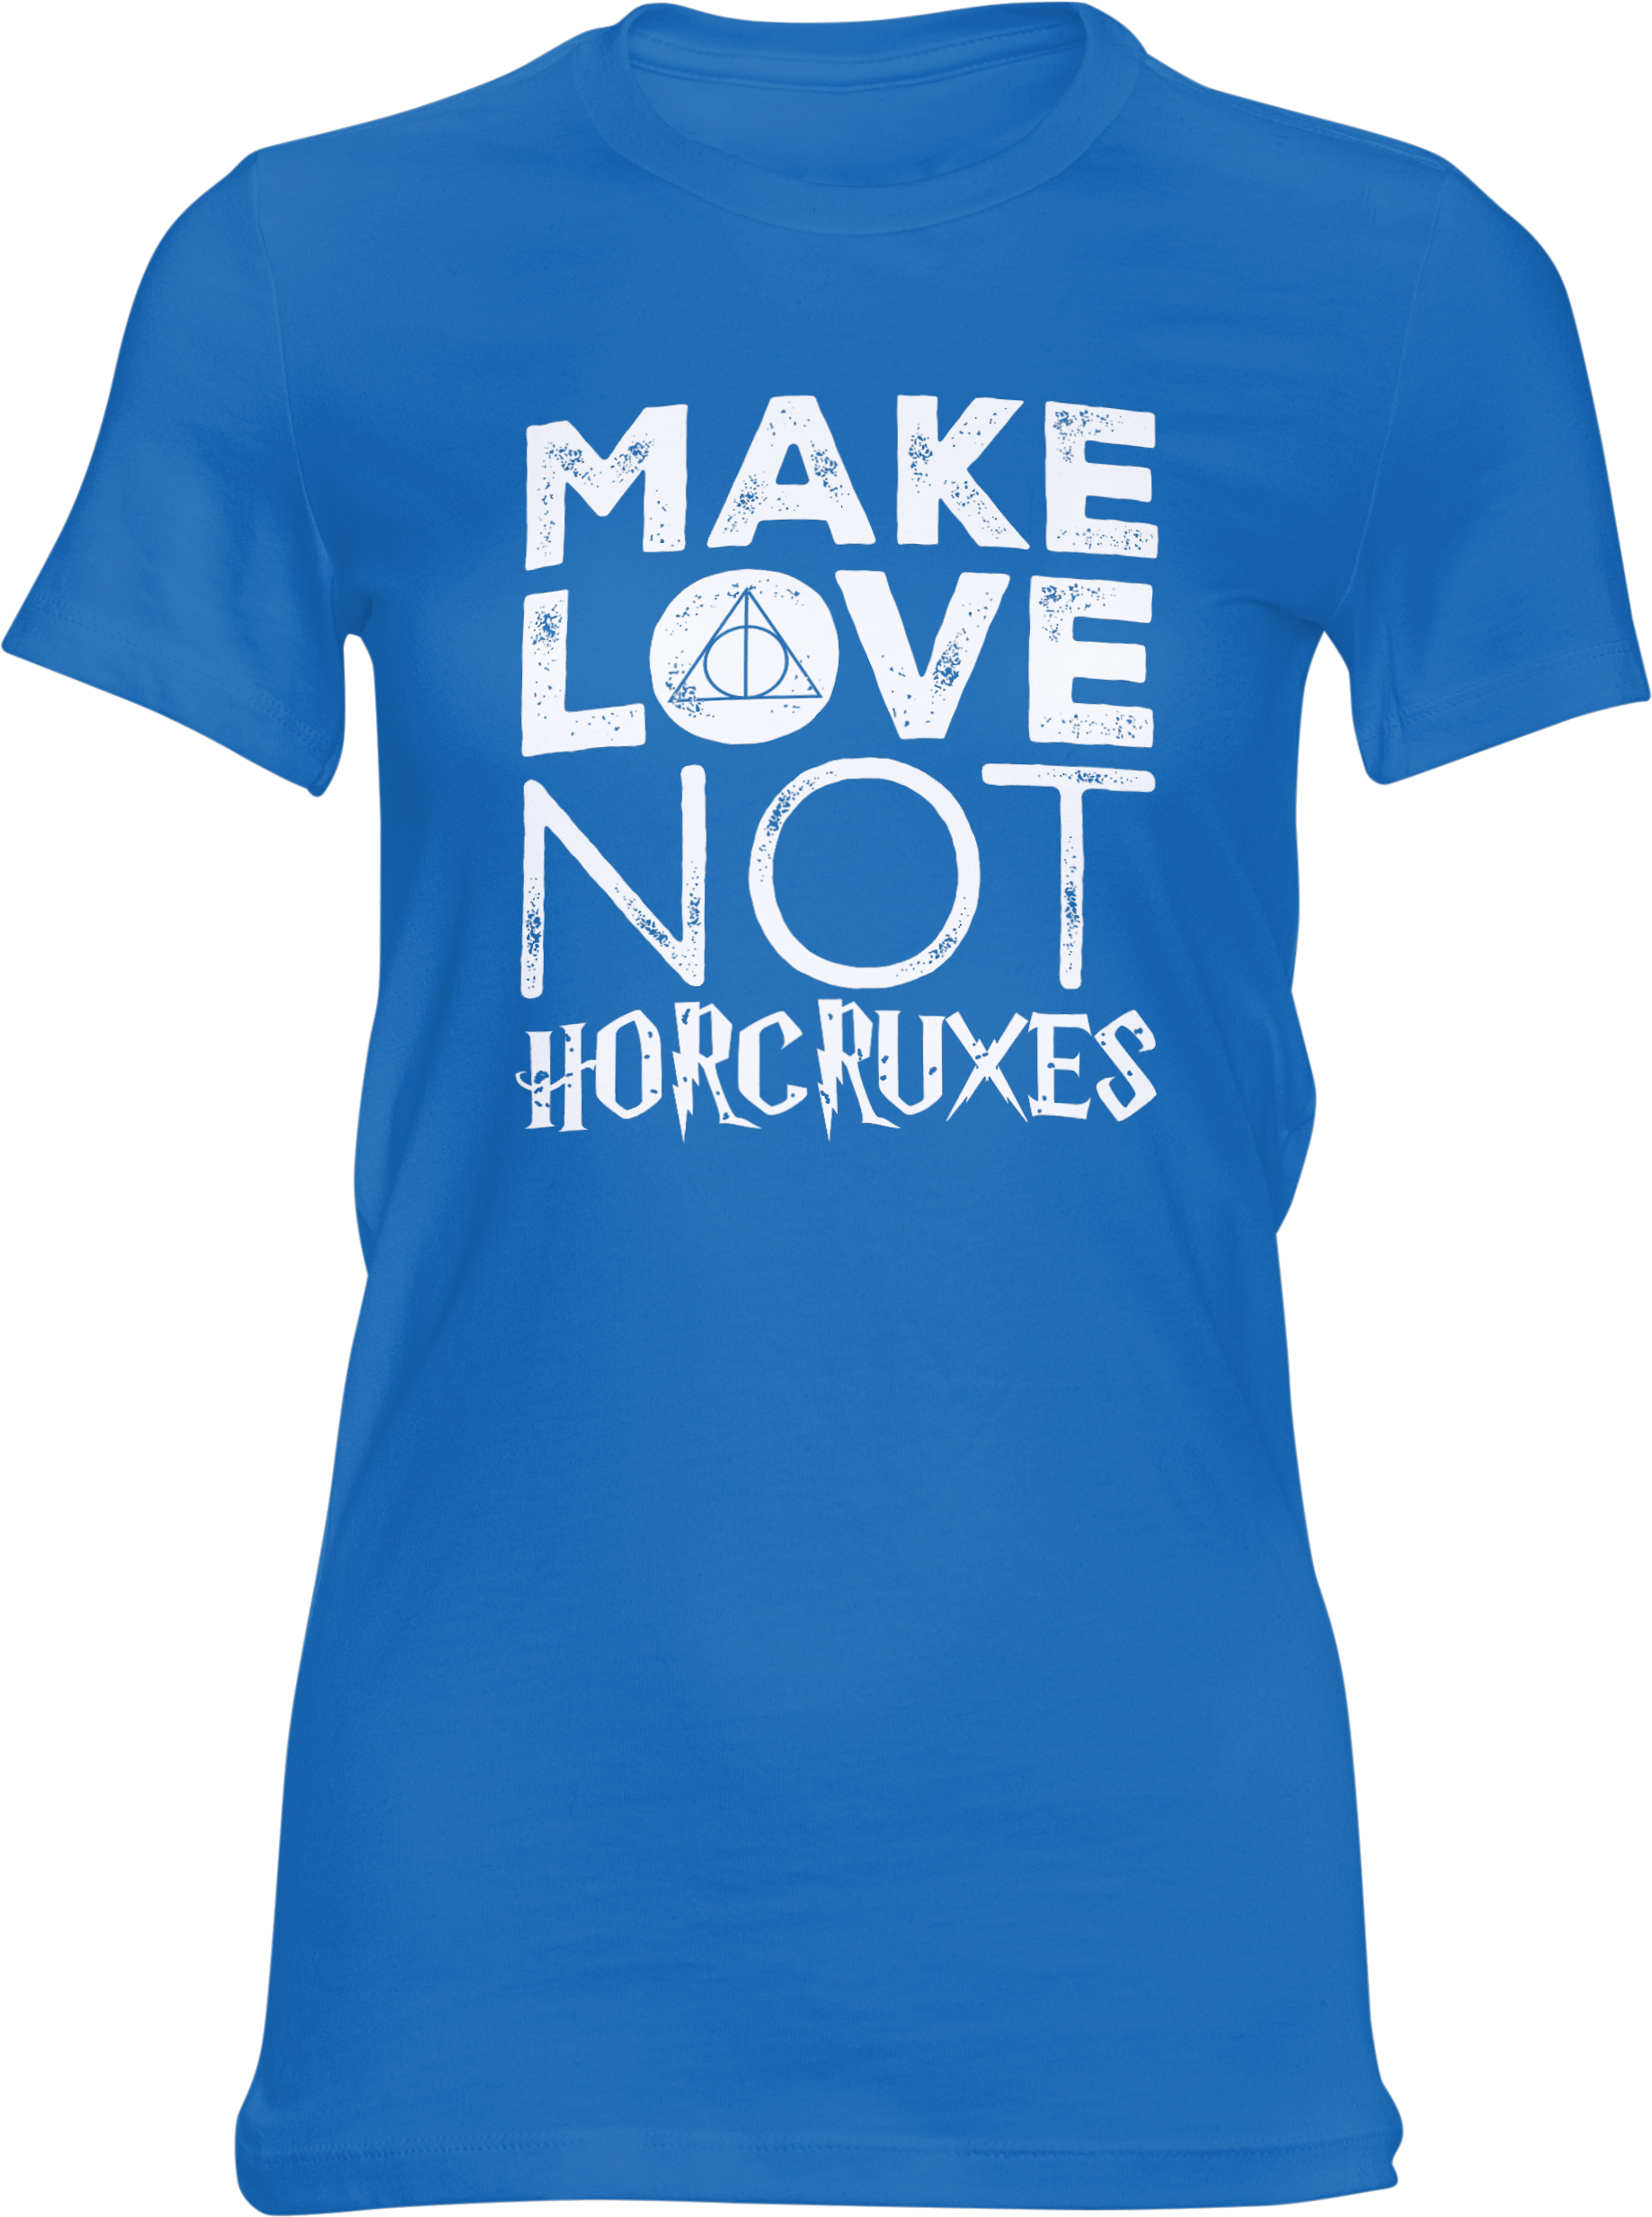 Motiv-Shirt – Make Love Not Horcruxes – Girlie-Shirt (blau)